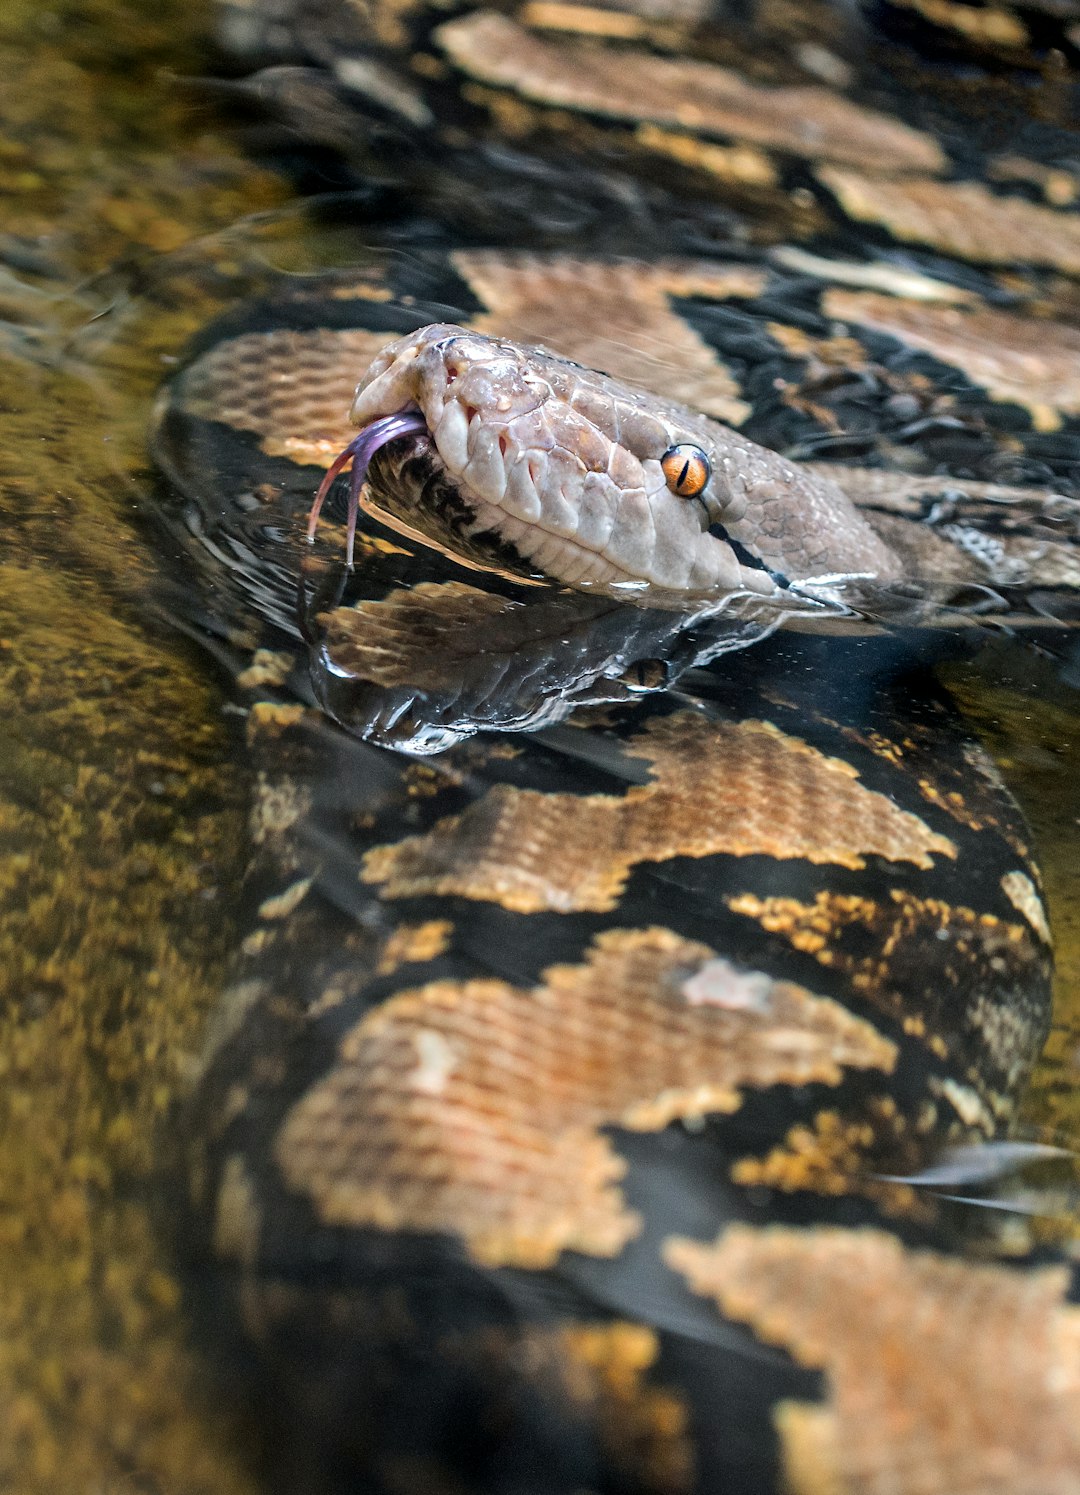 A reticulated python enjoys a cooling bath.